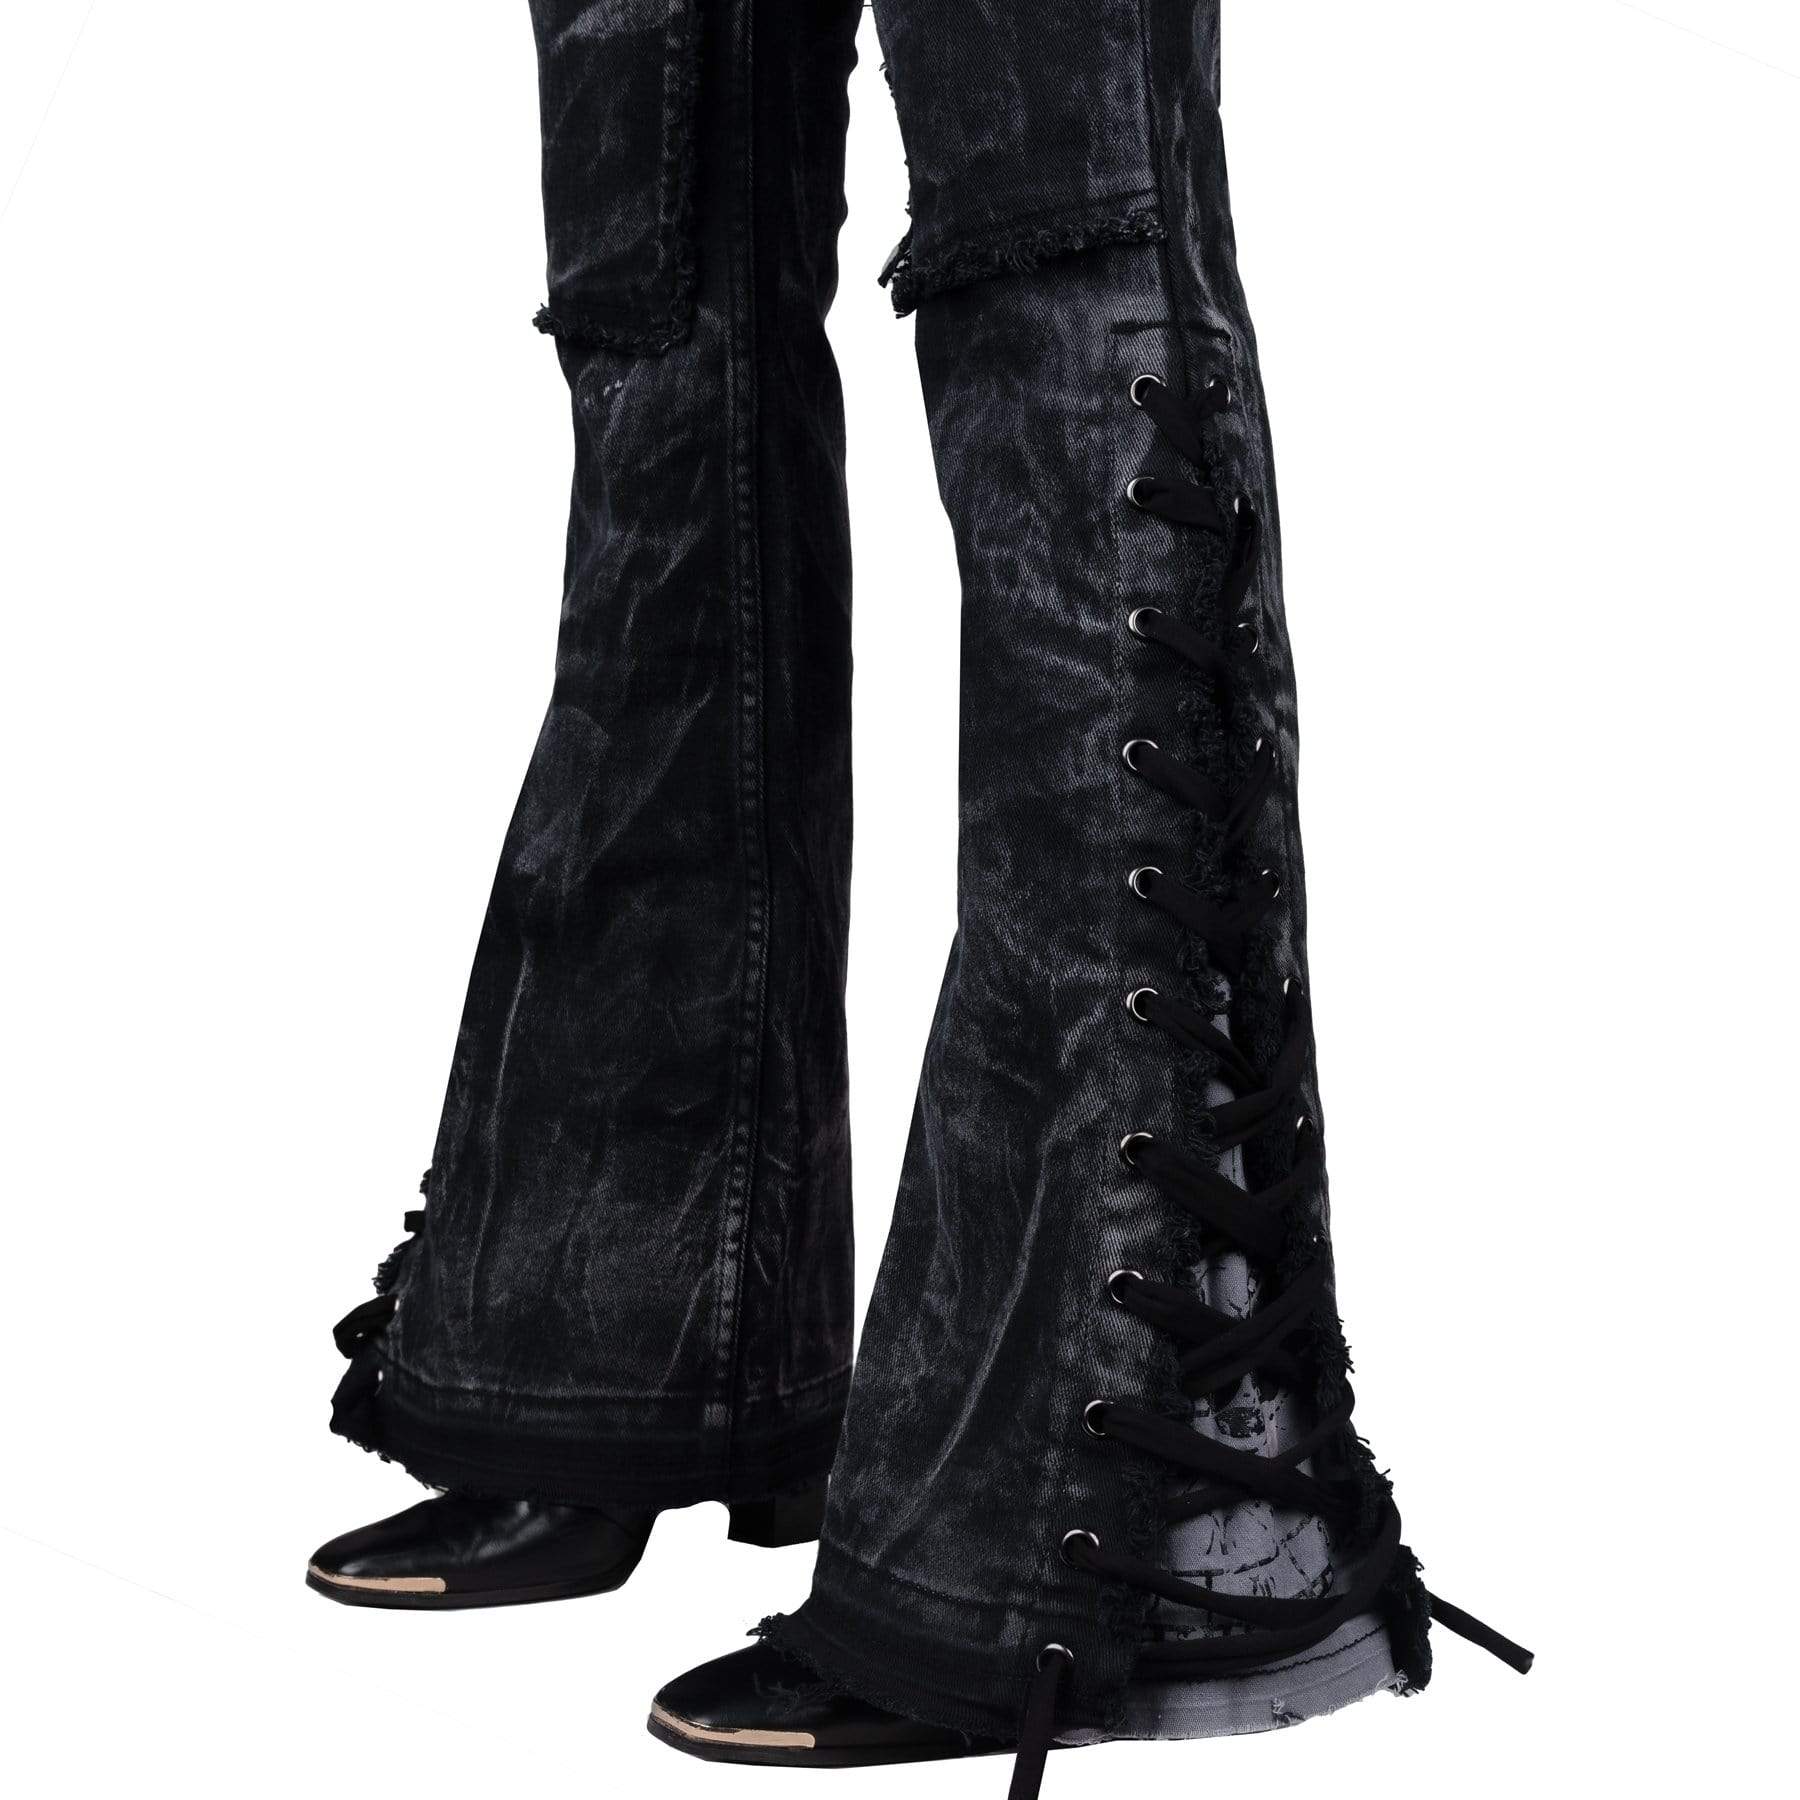 Wornstar Clothing Unisex Jeans. Cutlass Denim Stage Pants - Black